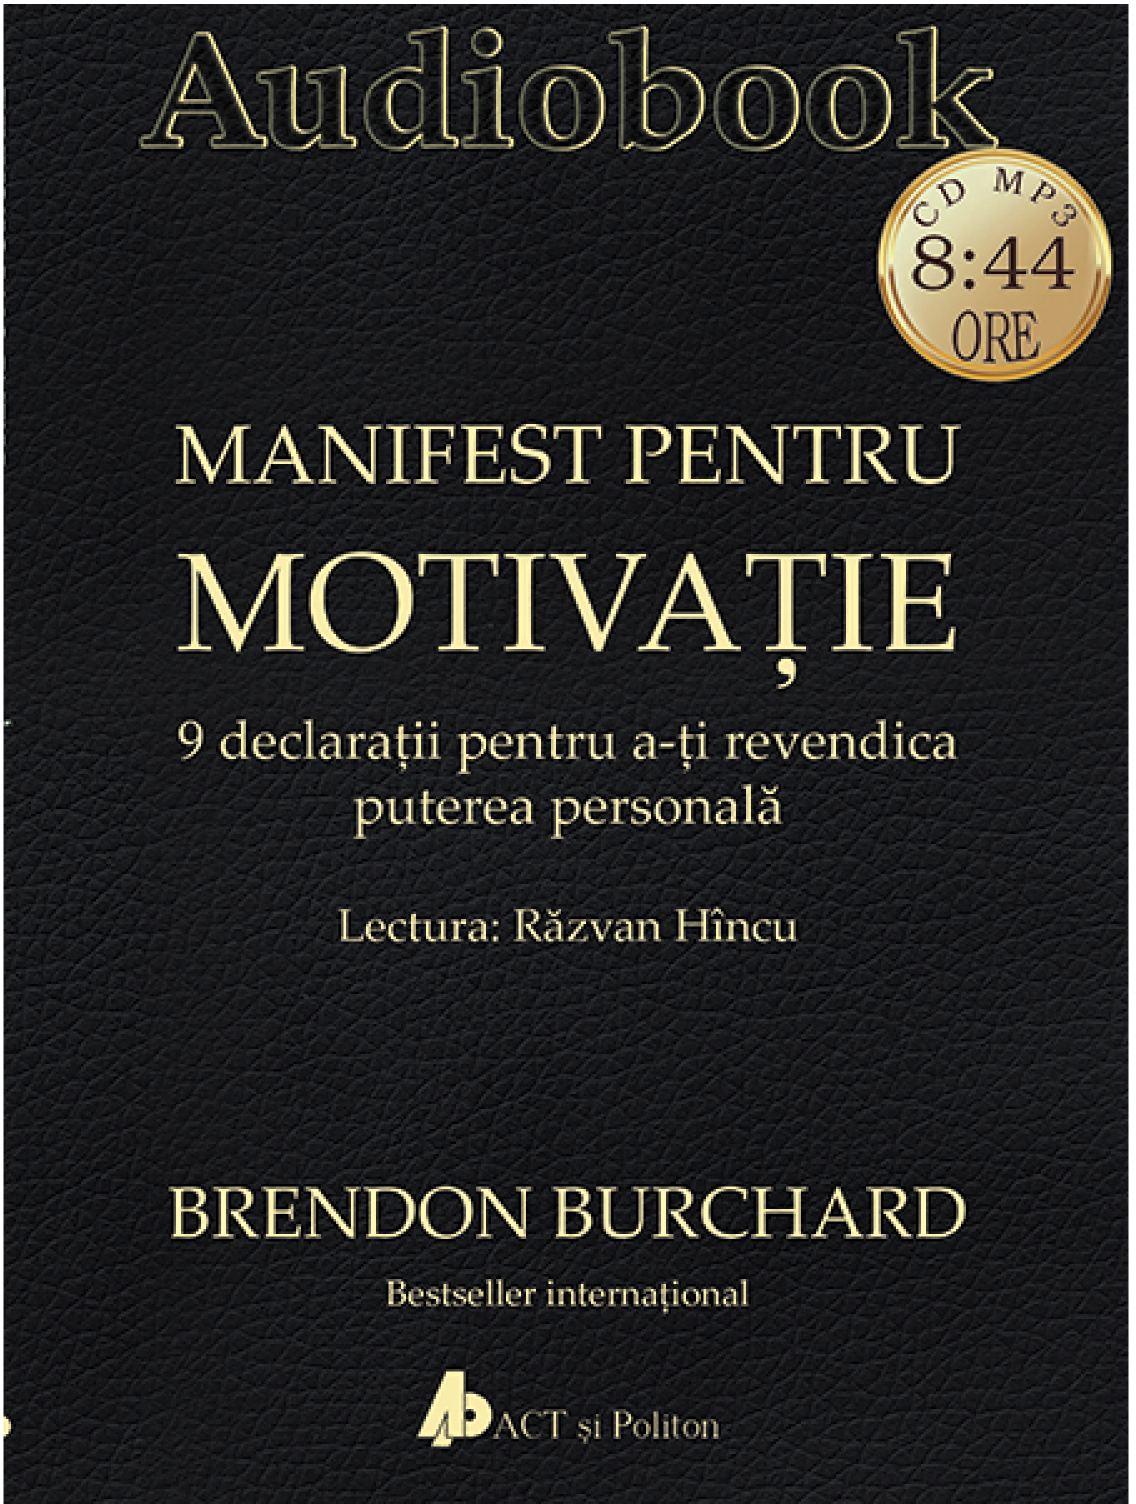 Manifest pentru motivatie | Brendon Burchard Brendon Burchard poza bestsellers.ro